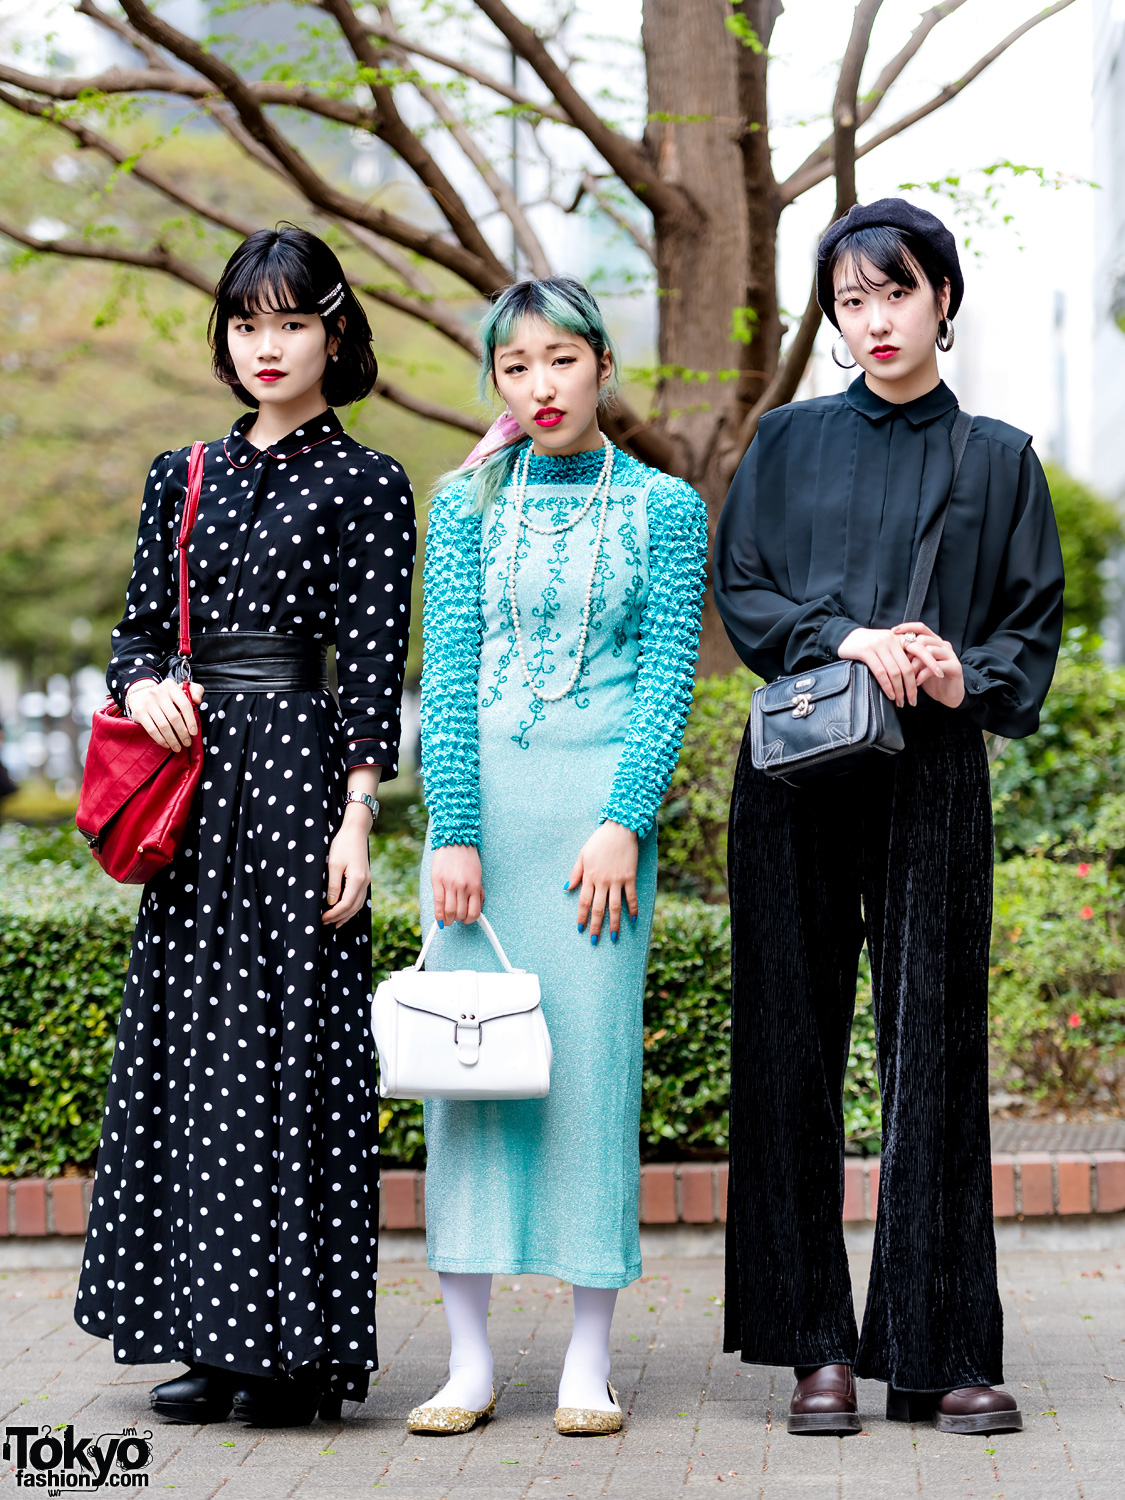 Tokyo Trio's Street Styles w/ Funktique, Emoda Zara, Tiffany & Cartier